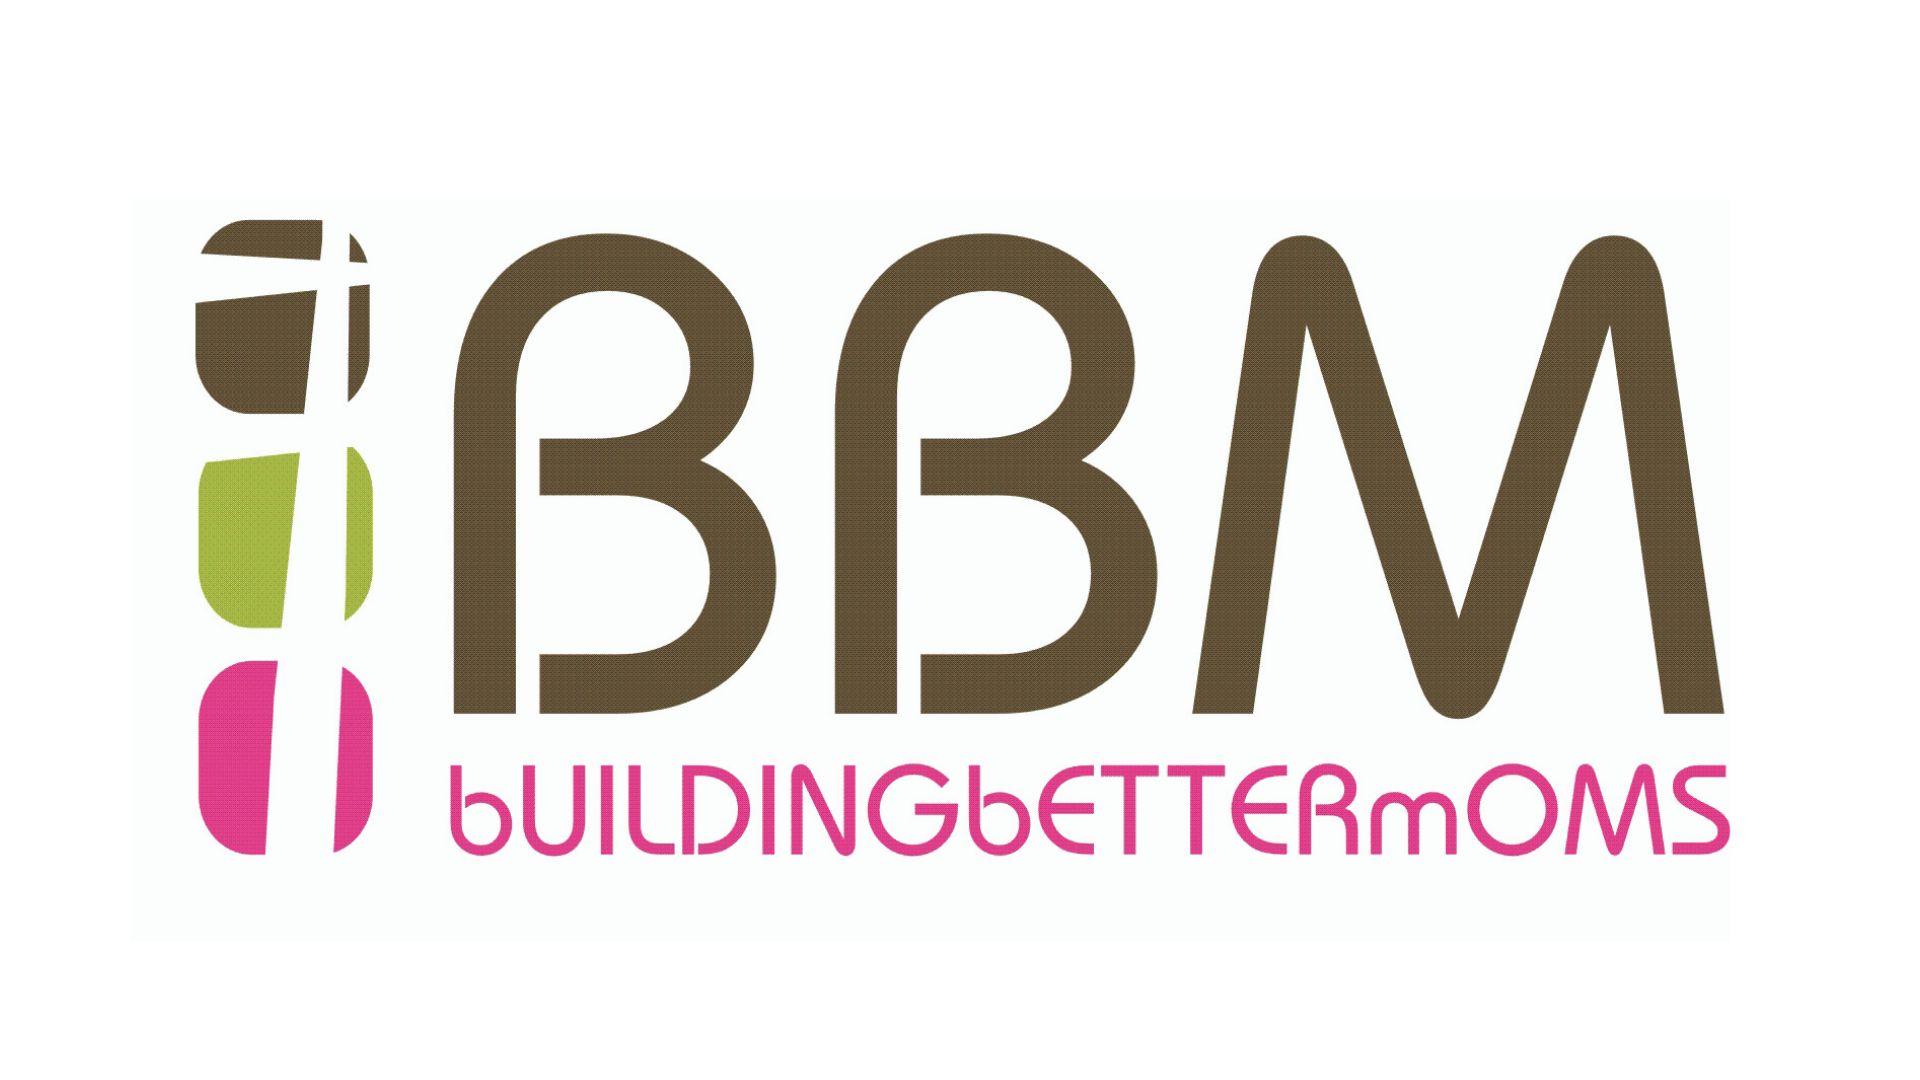 Building Better Moms - 1920x1080